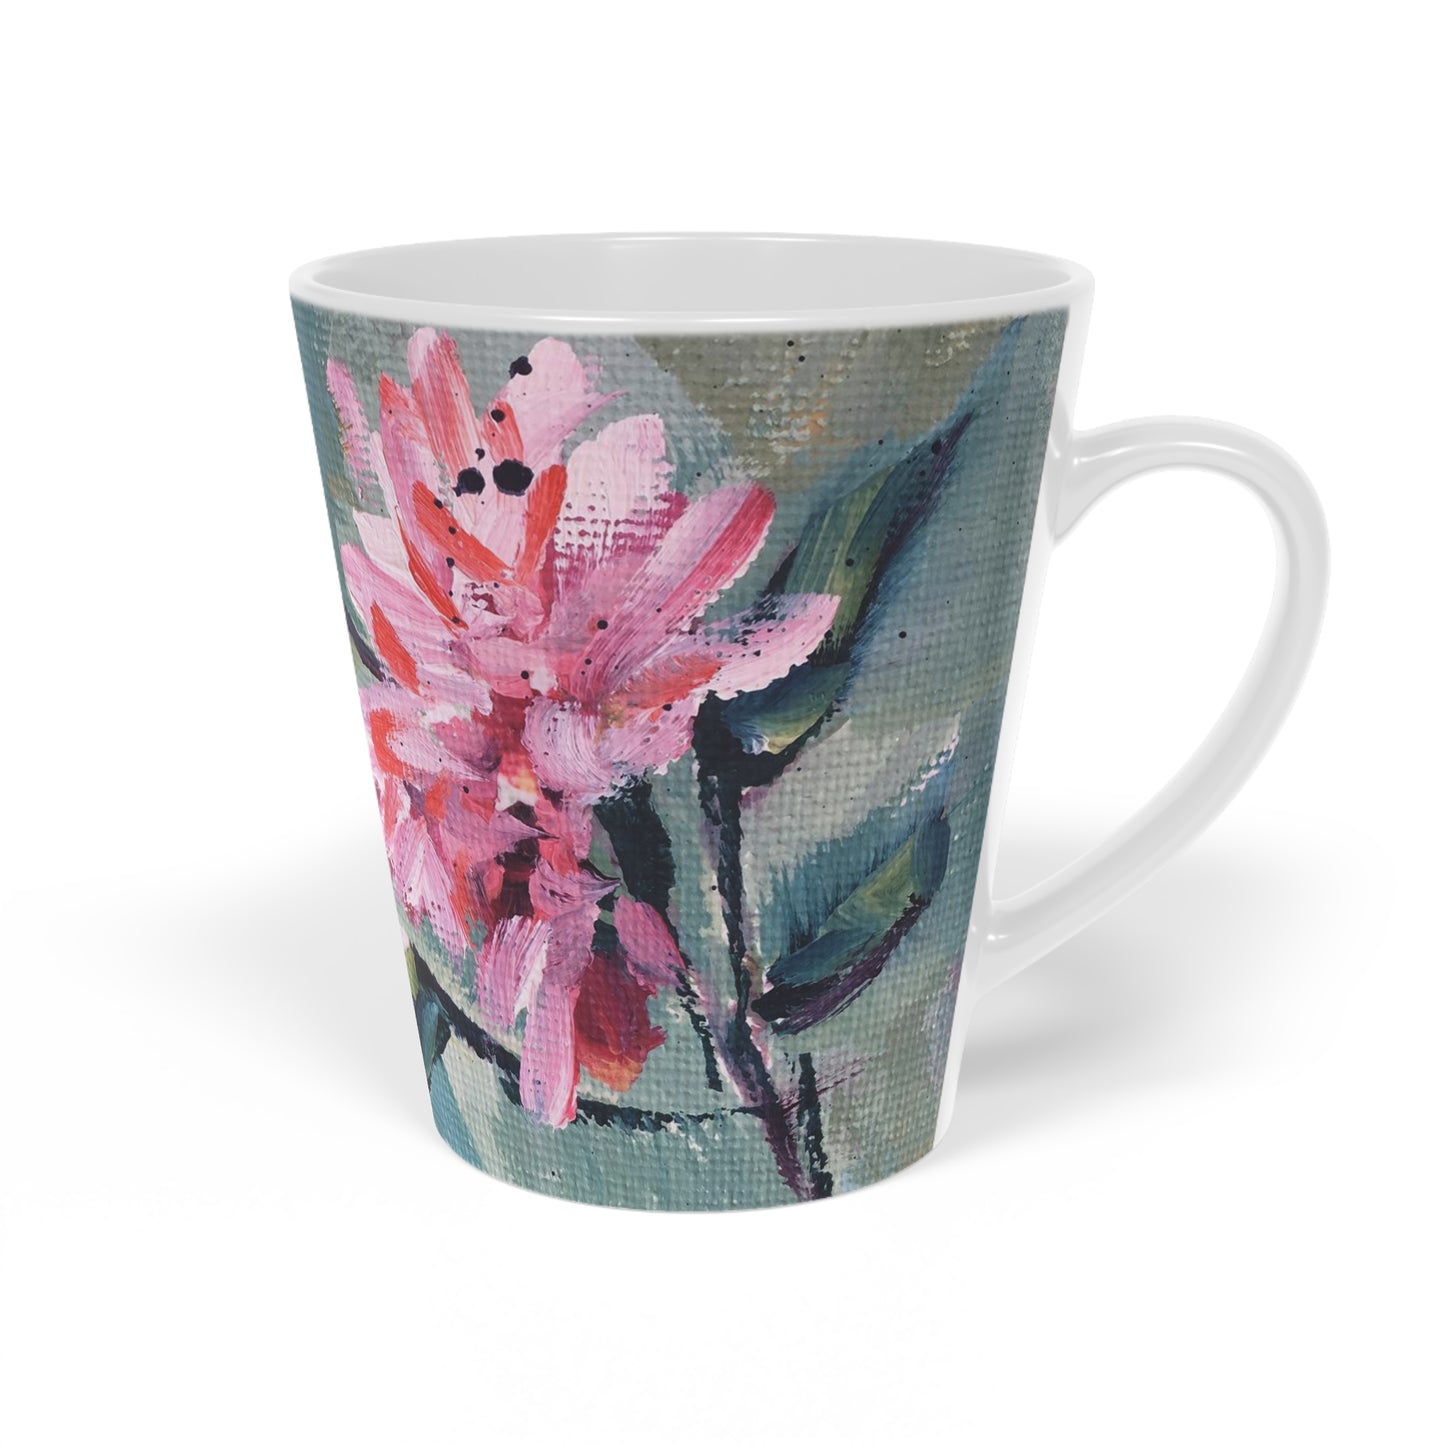 Tasse à latte fleur rose colibri rose, 12 oz